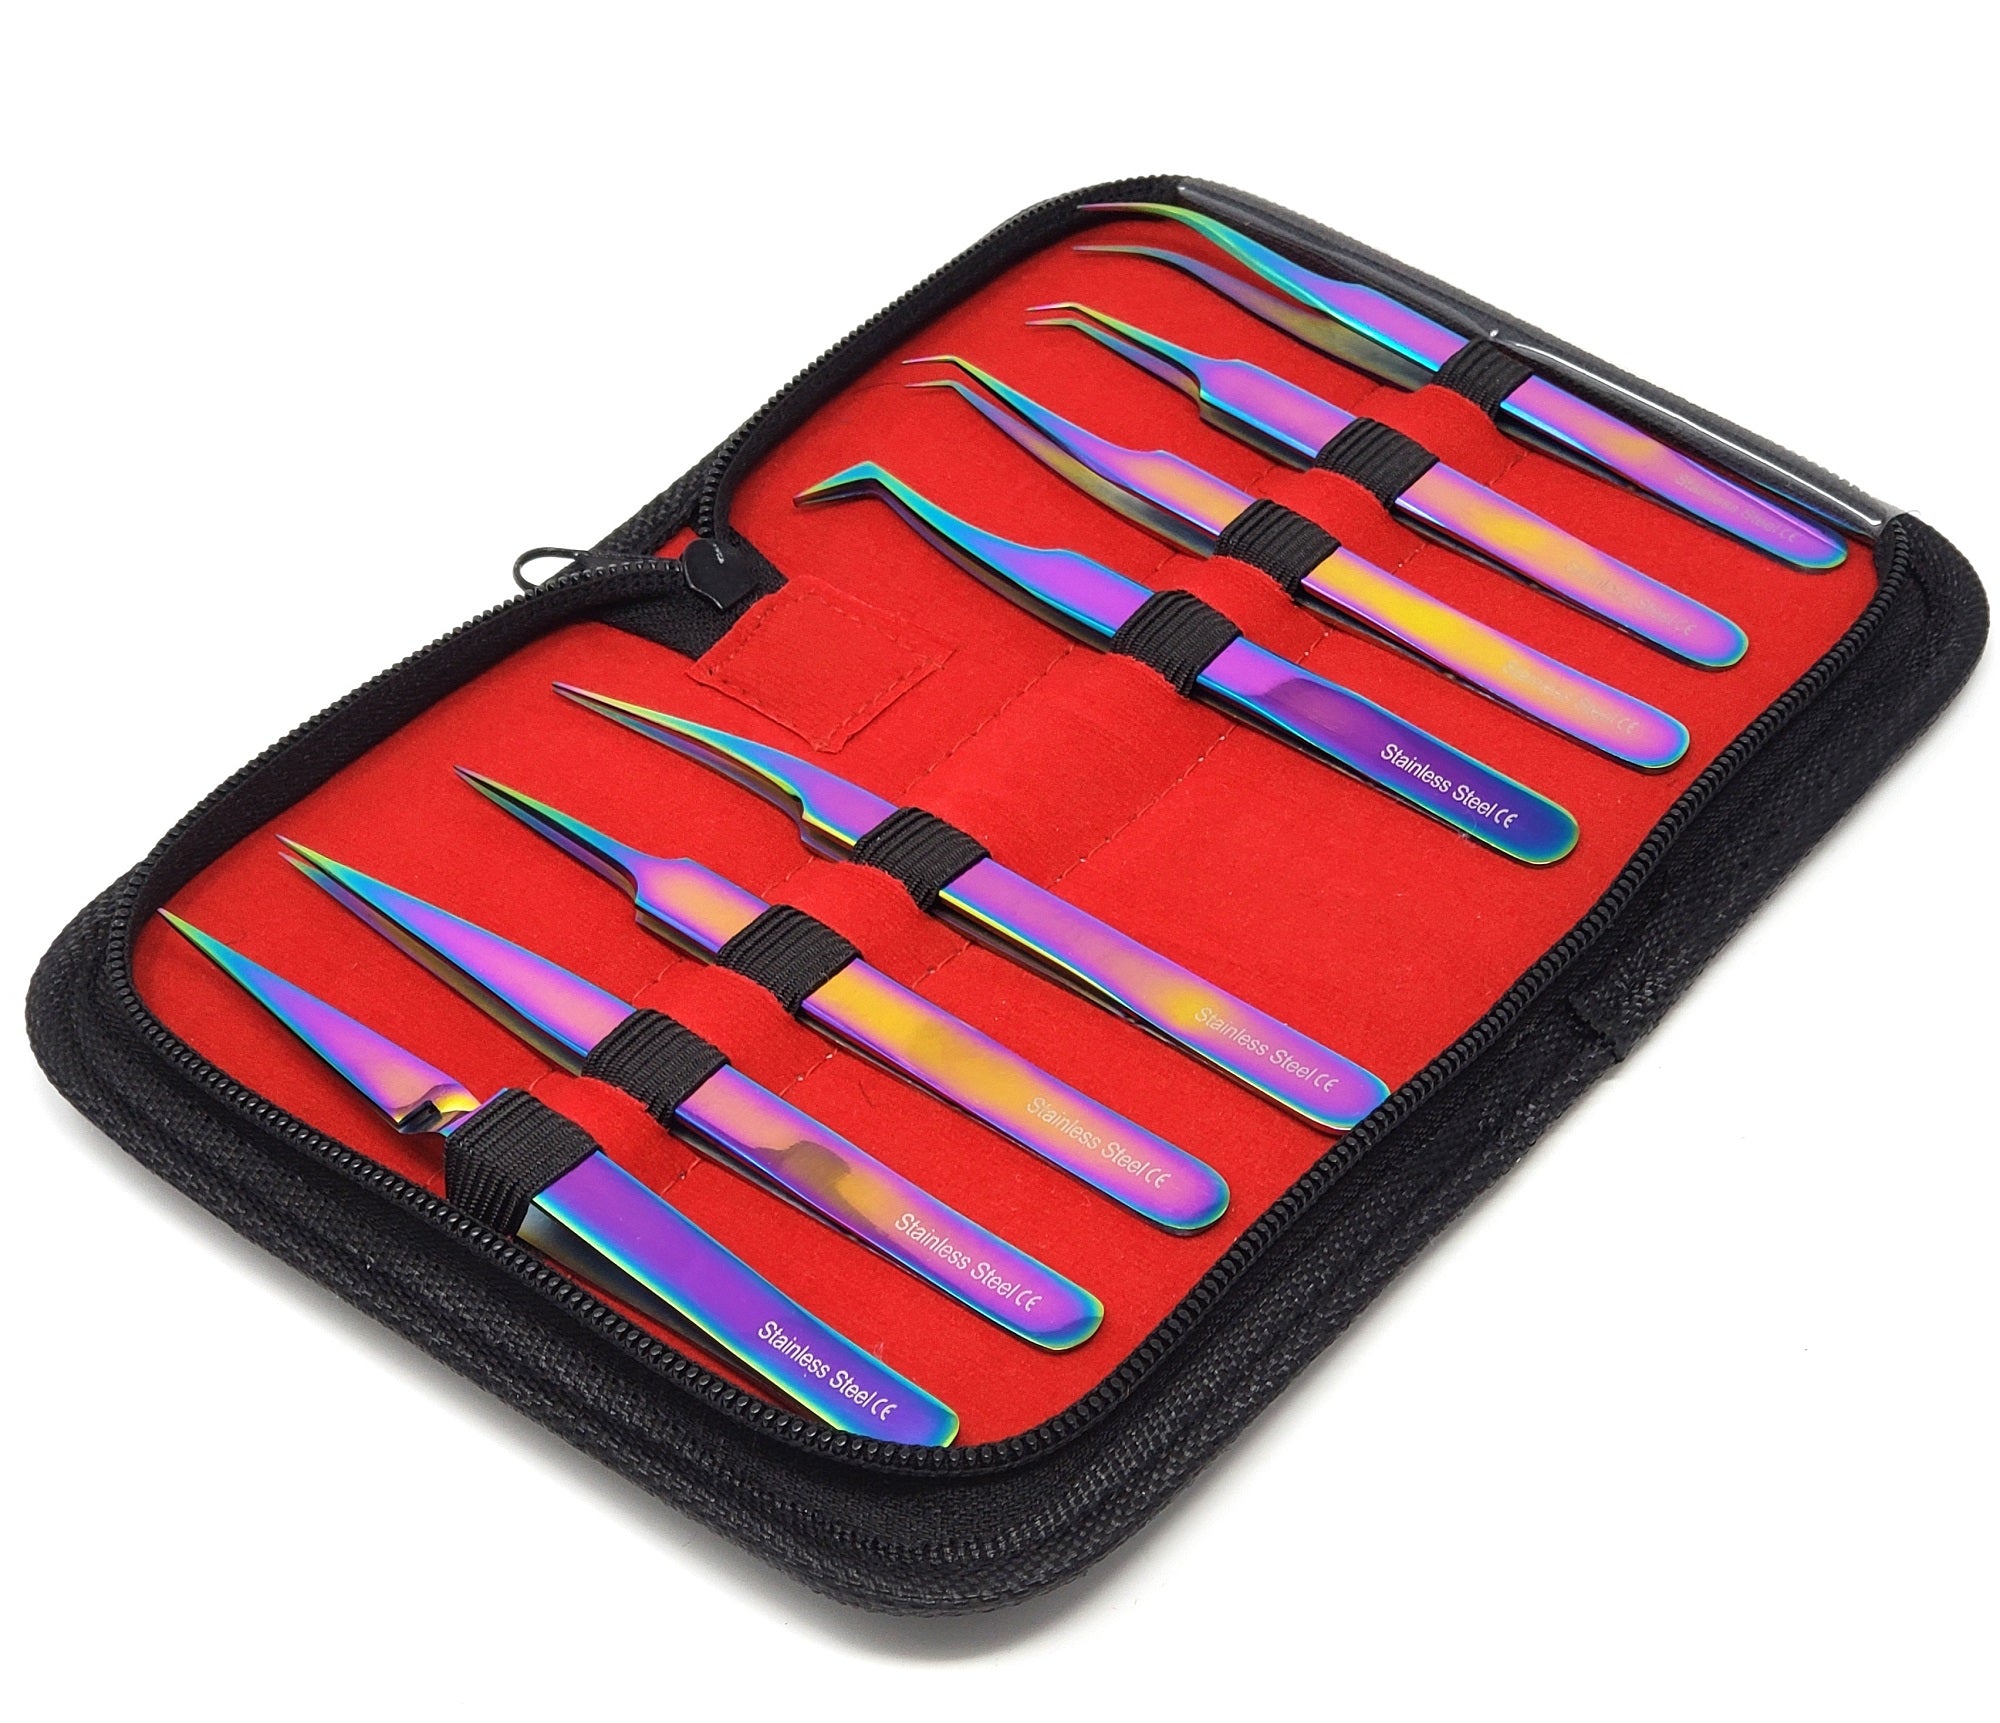 4PCS TWEEZERS SET with Rubber Tip Stainless Steel Tweezers Kit for  Repairing⟸ $21.78 - PicClick AU